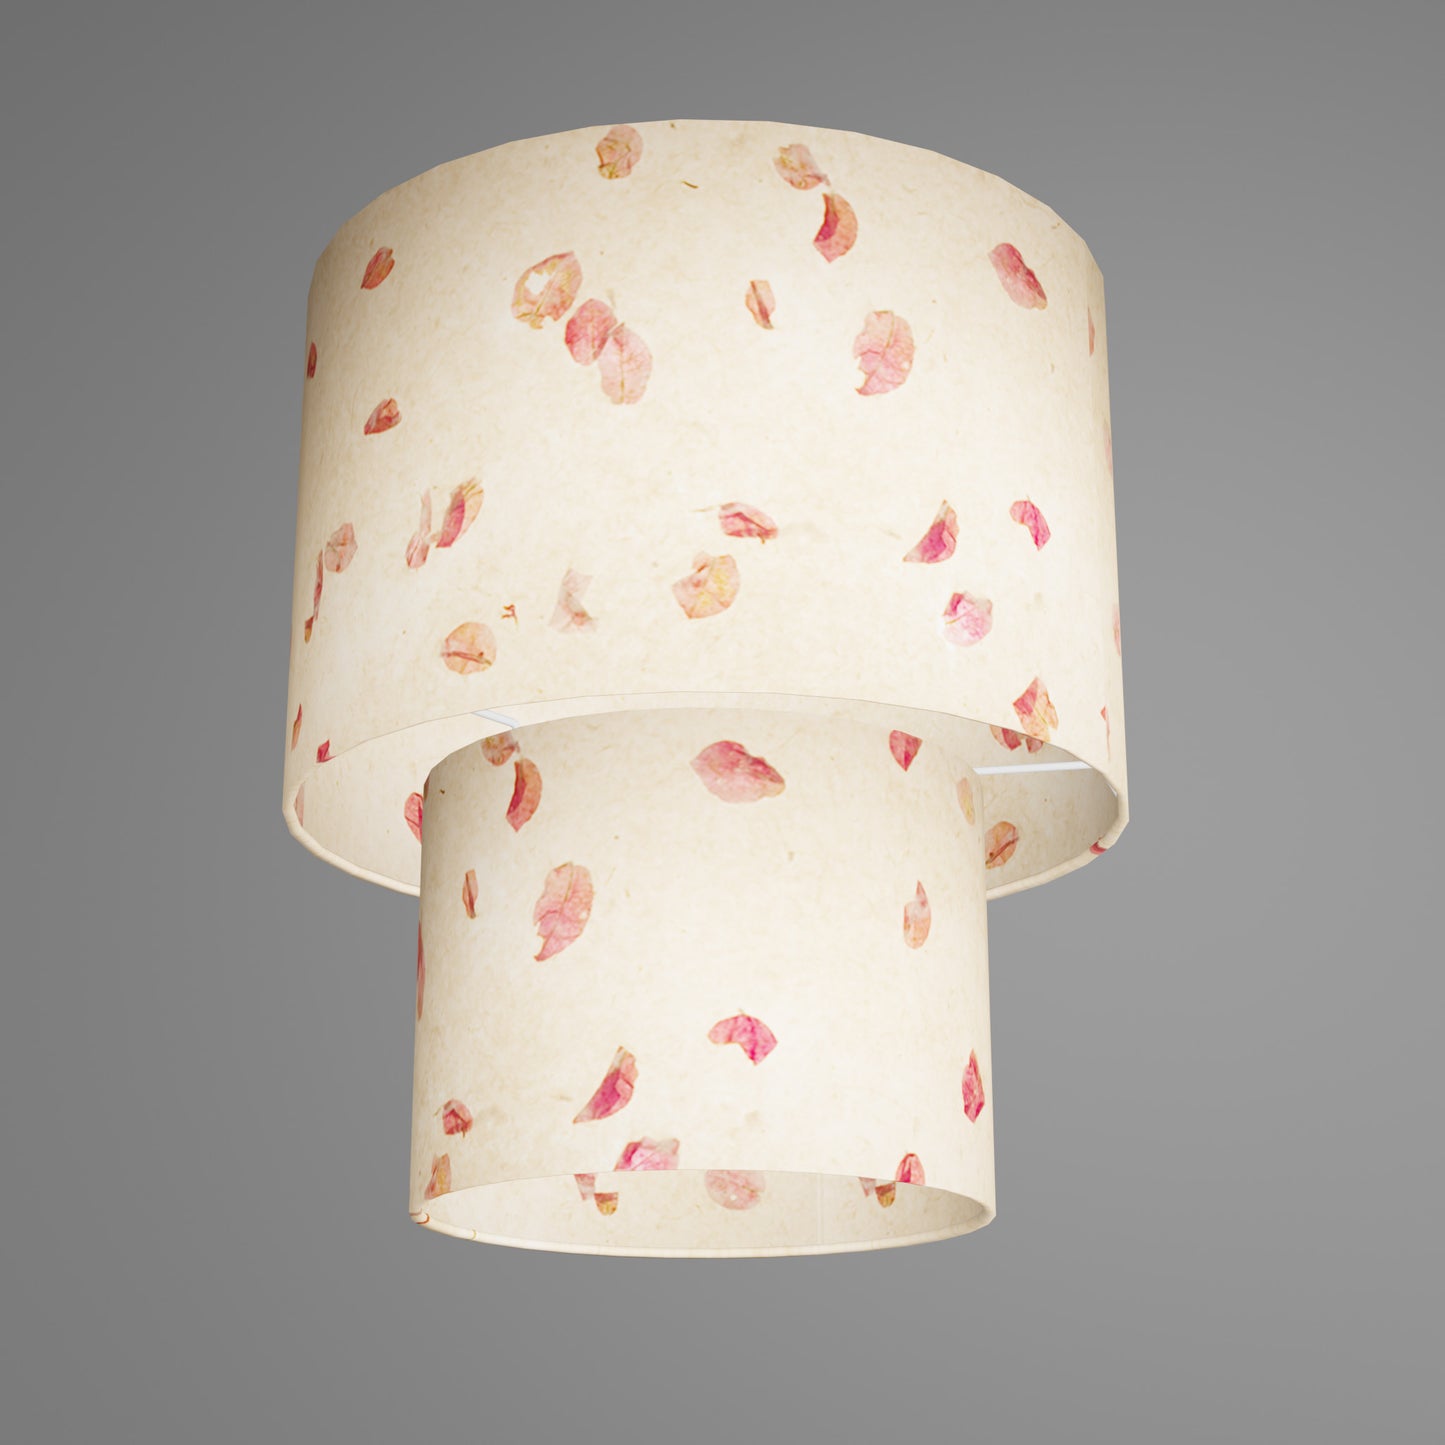 2 Tier Lamp Shade - P33 - Rose Petals on Natural Lokta, 30cm x 20cm & 20cm x 15cm